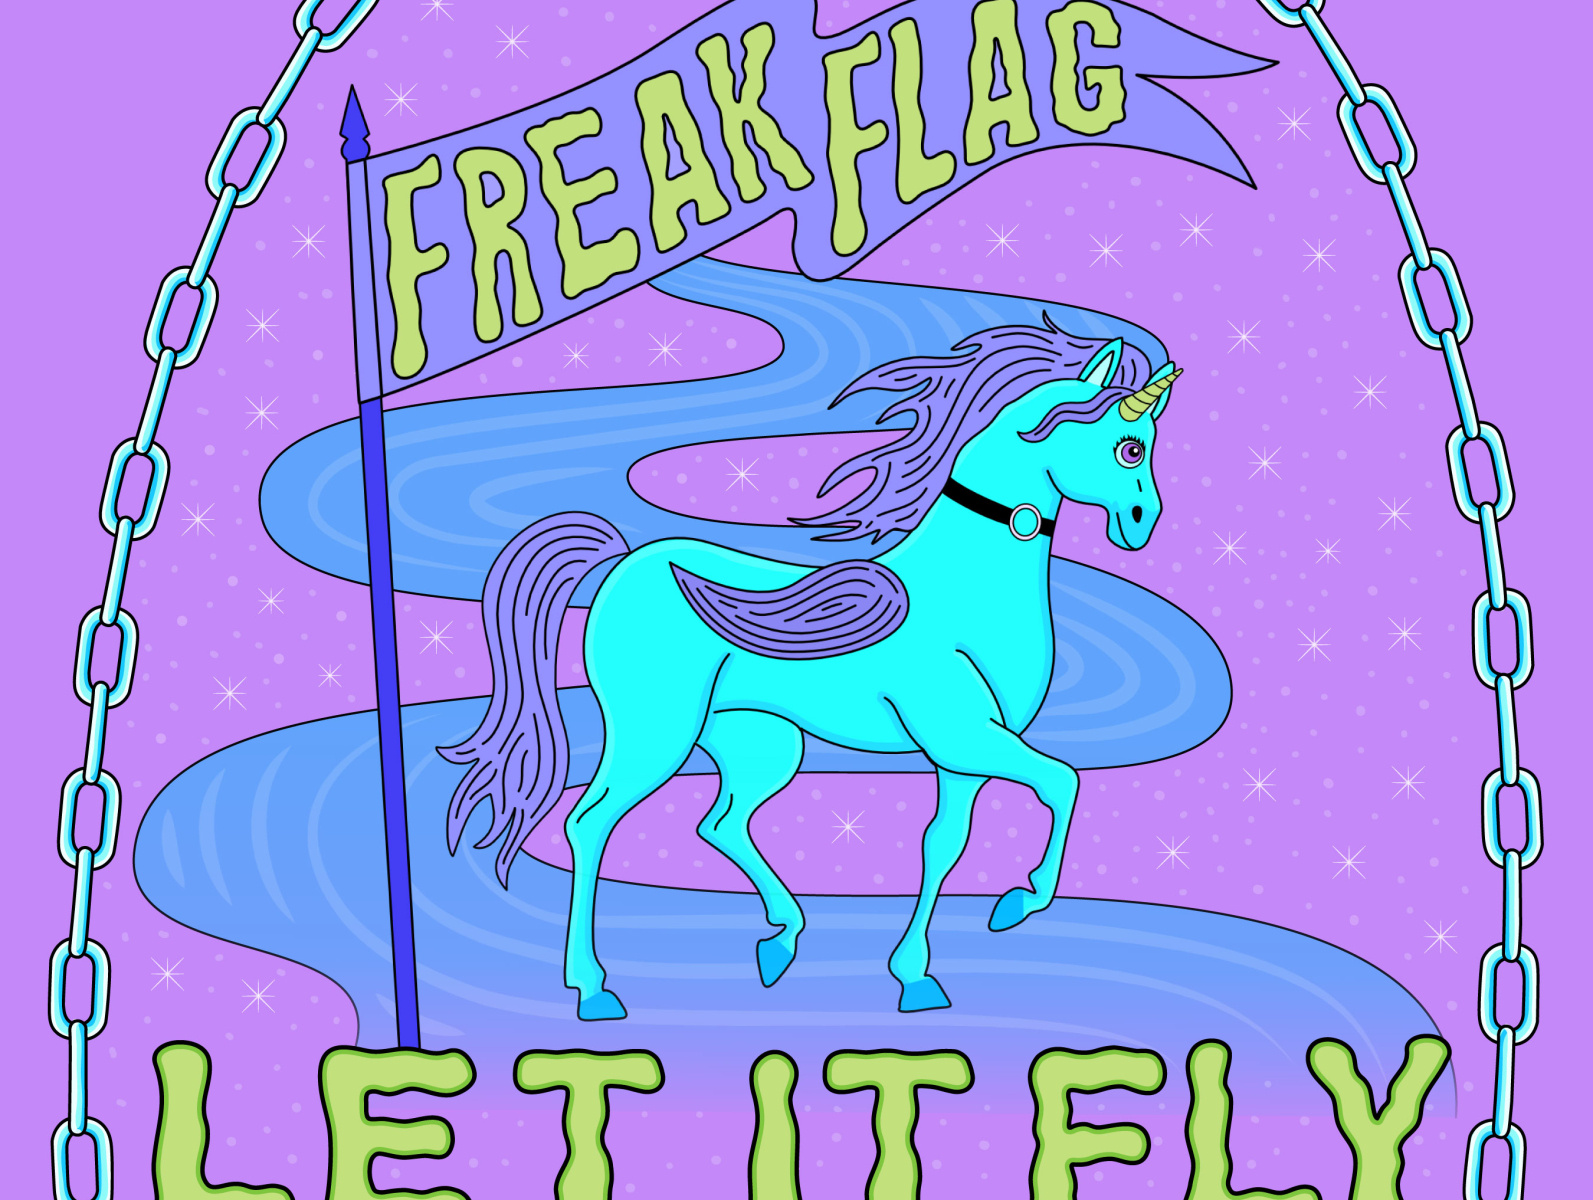 Freak flag by iana